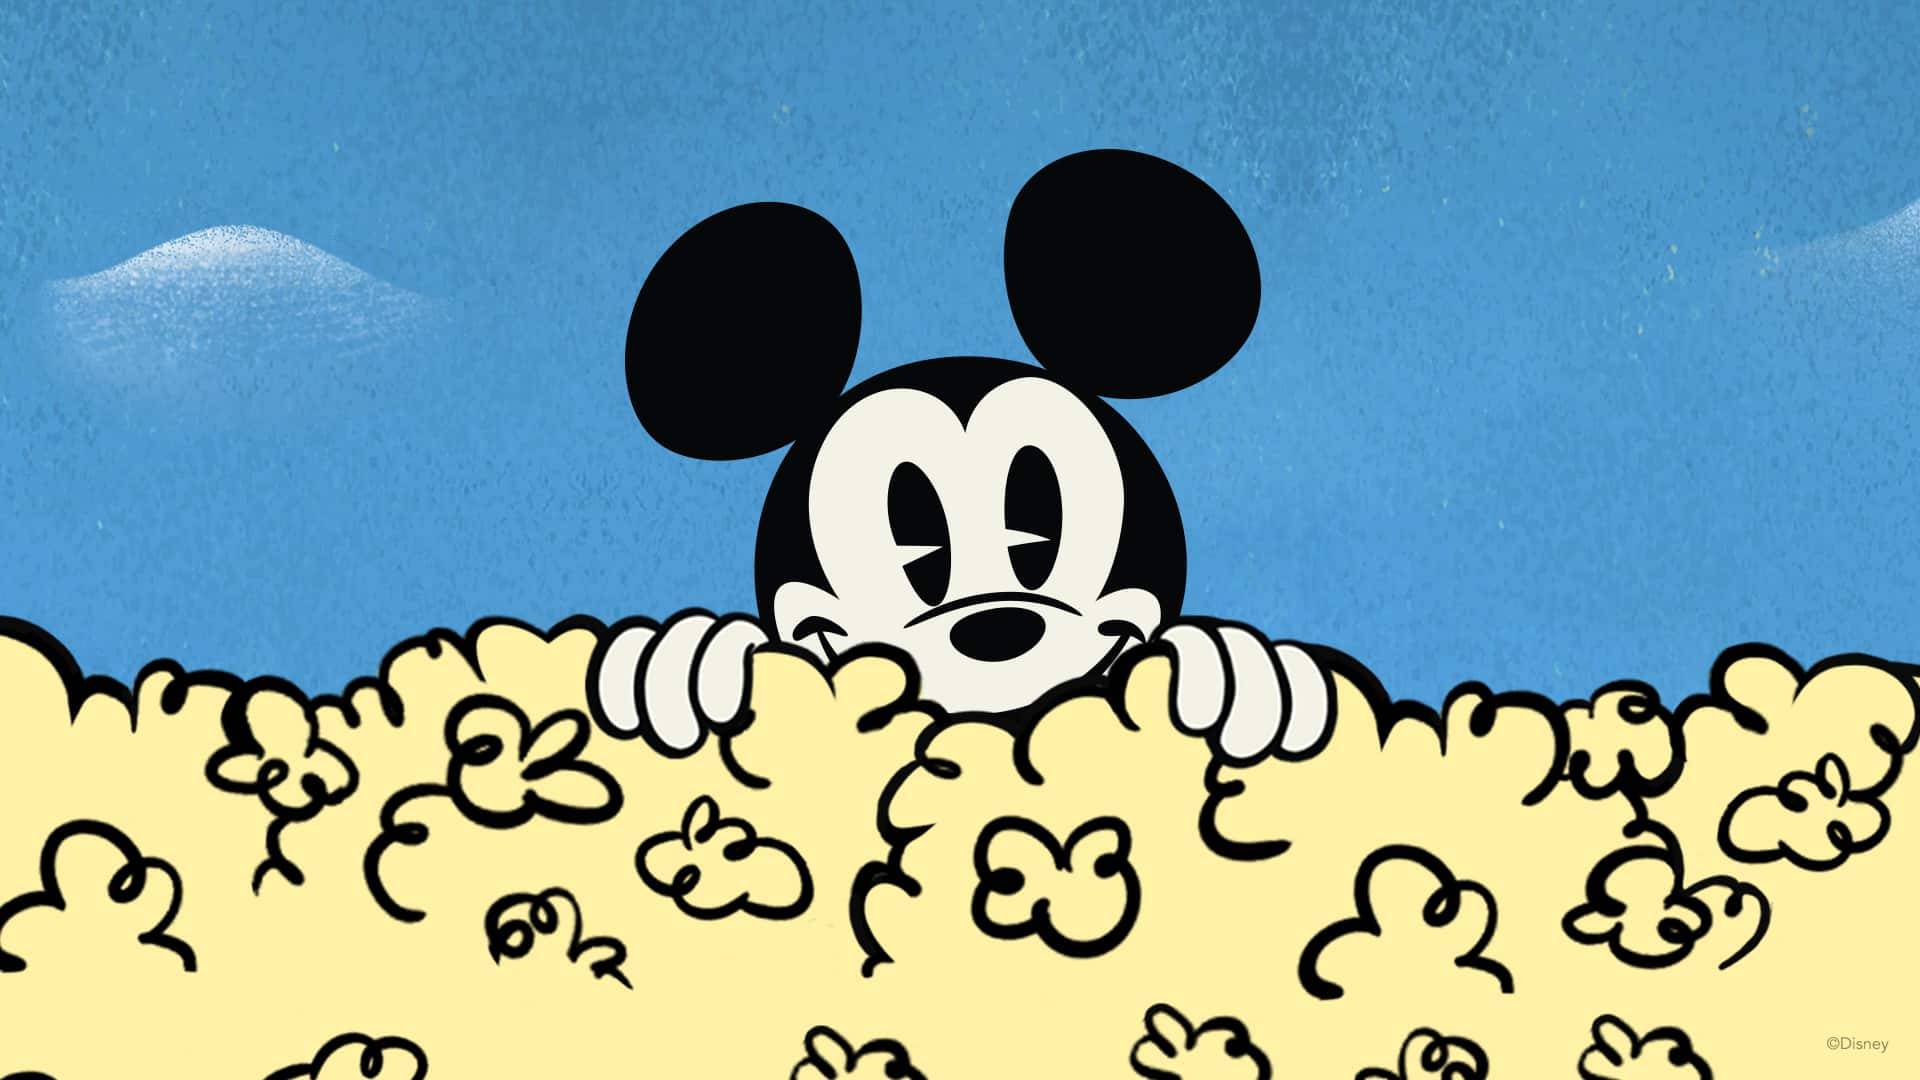 Mickey Mouse Popcorn Bucket